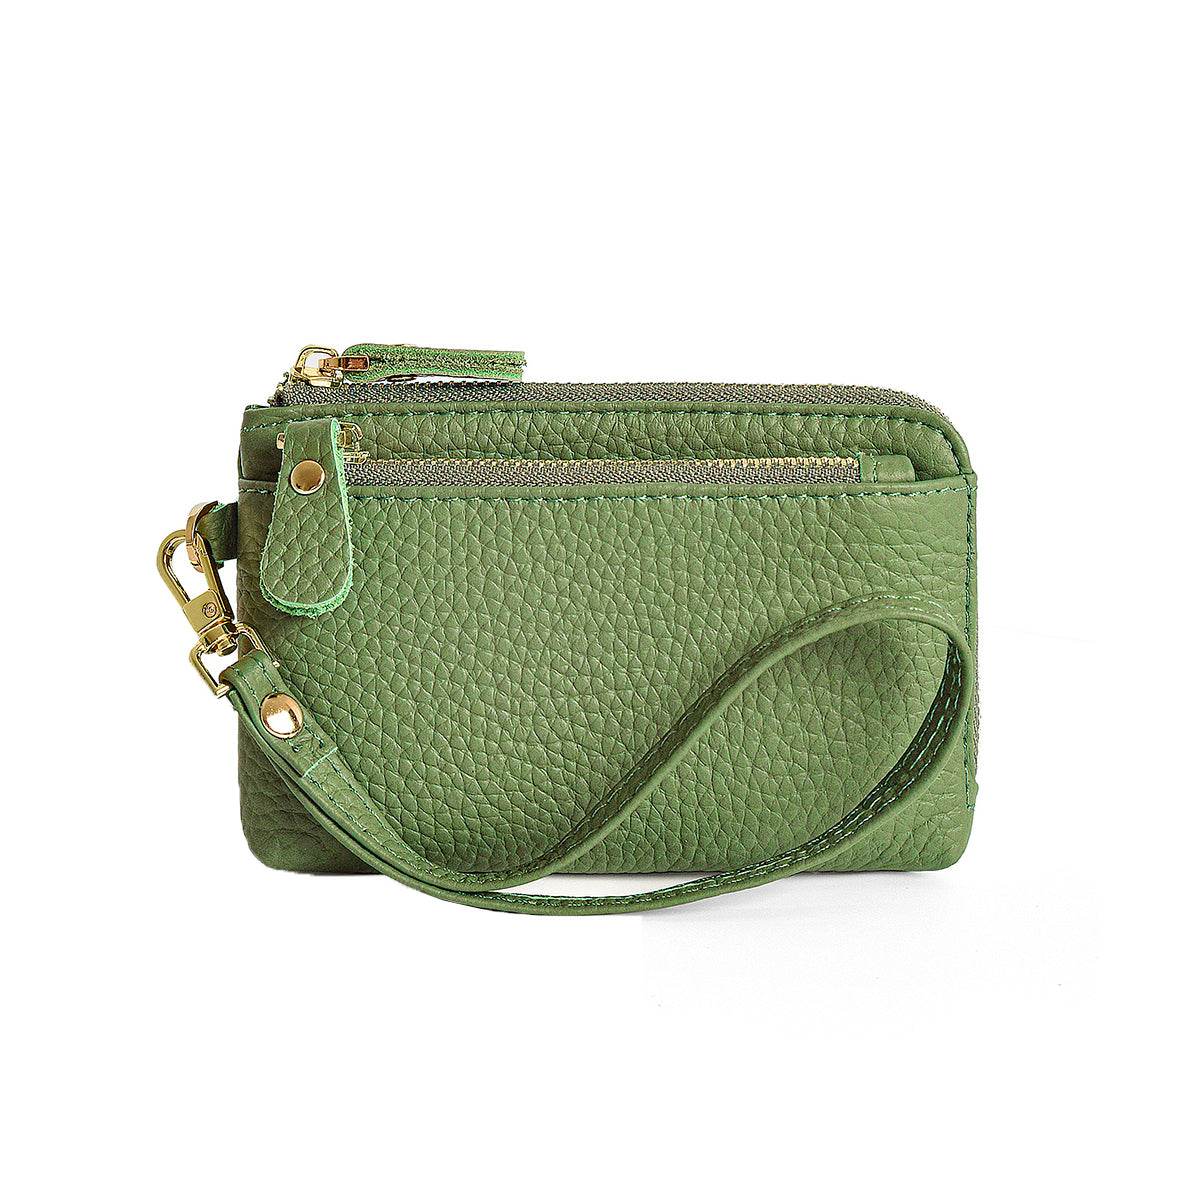 Women's genuine cowhide leather purse/ coin pouch Triple zip design